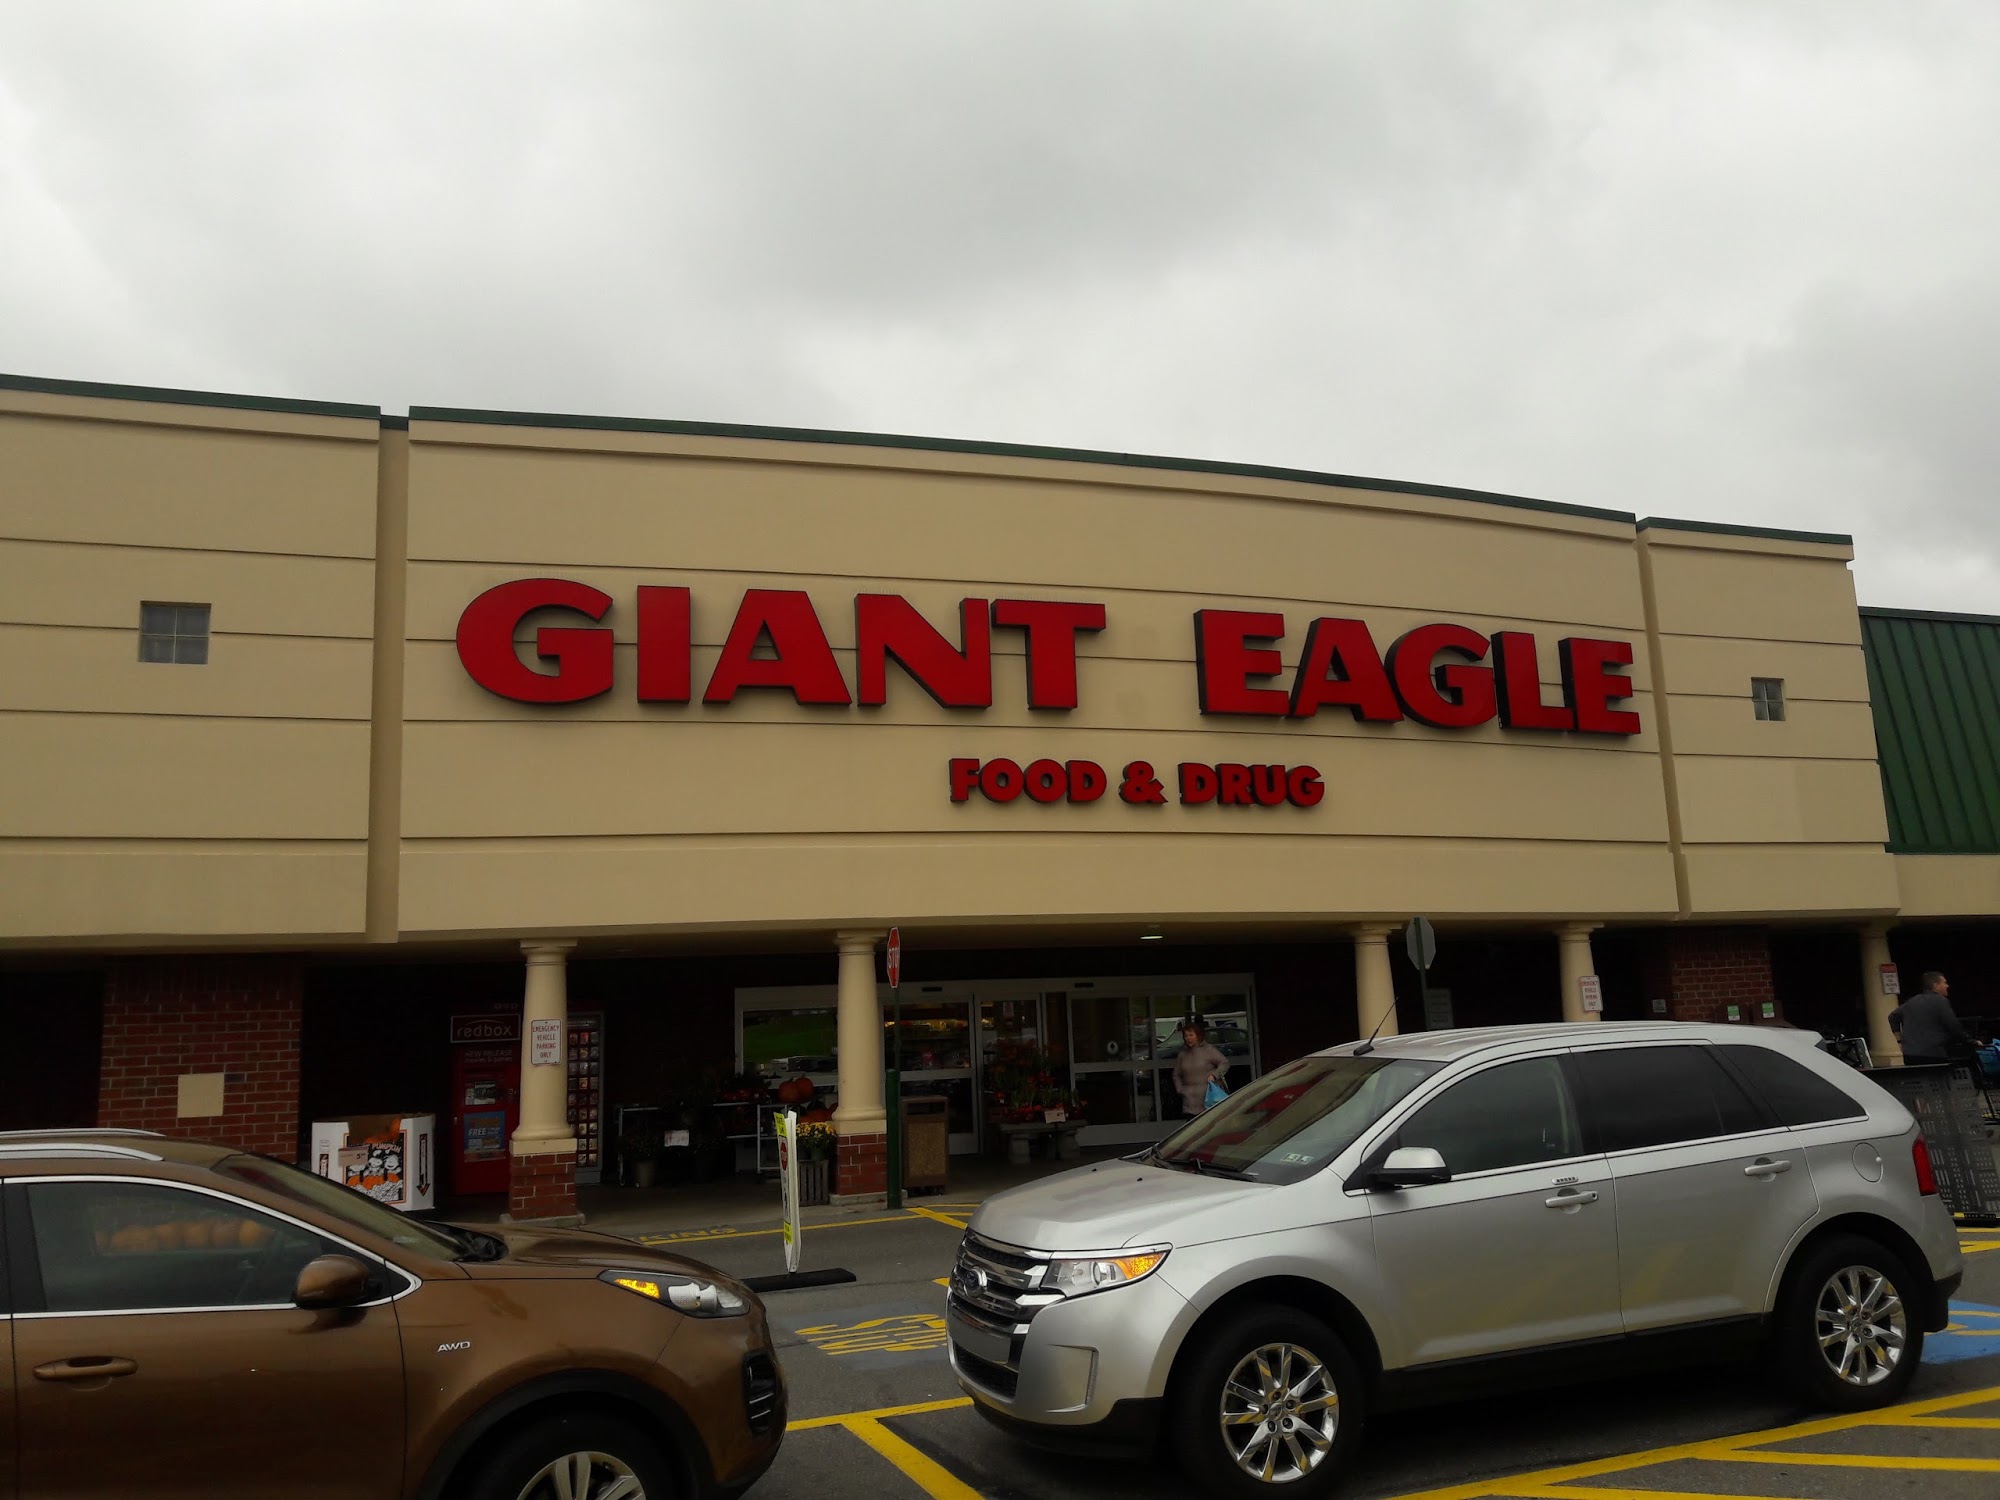 Giant Eagle Supermarket